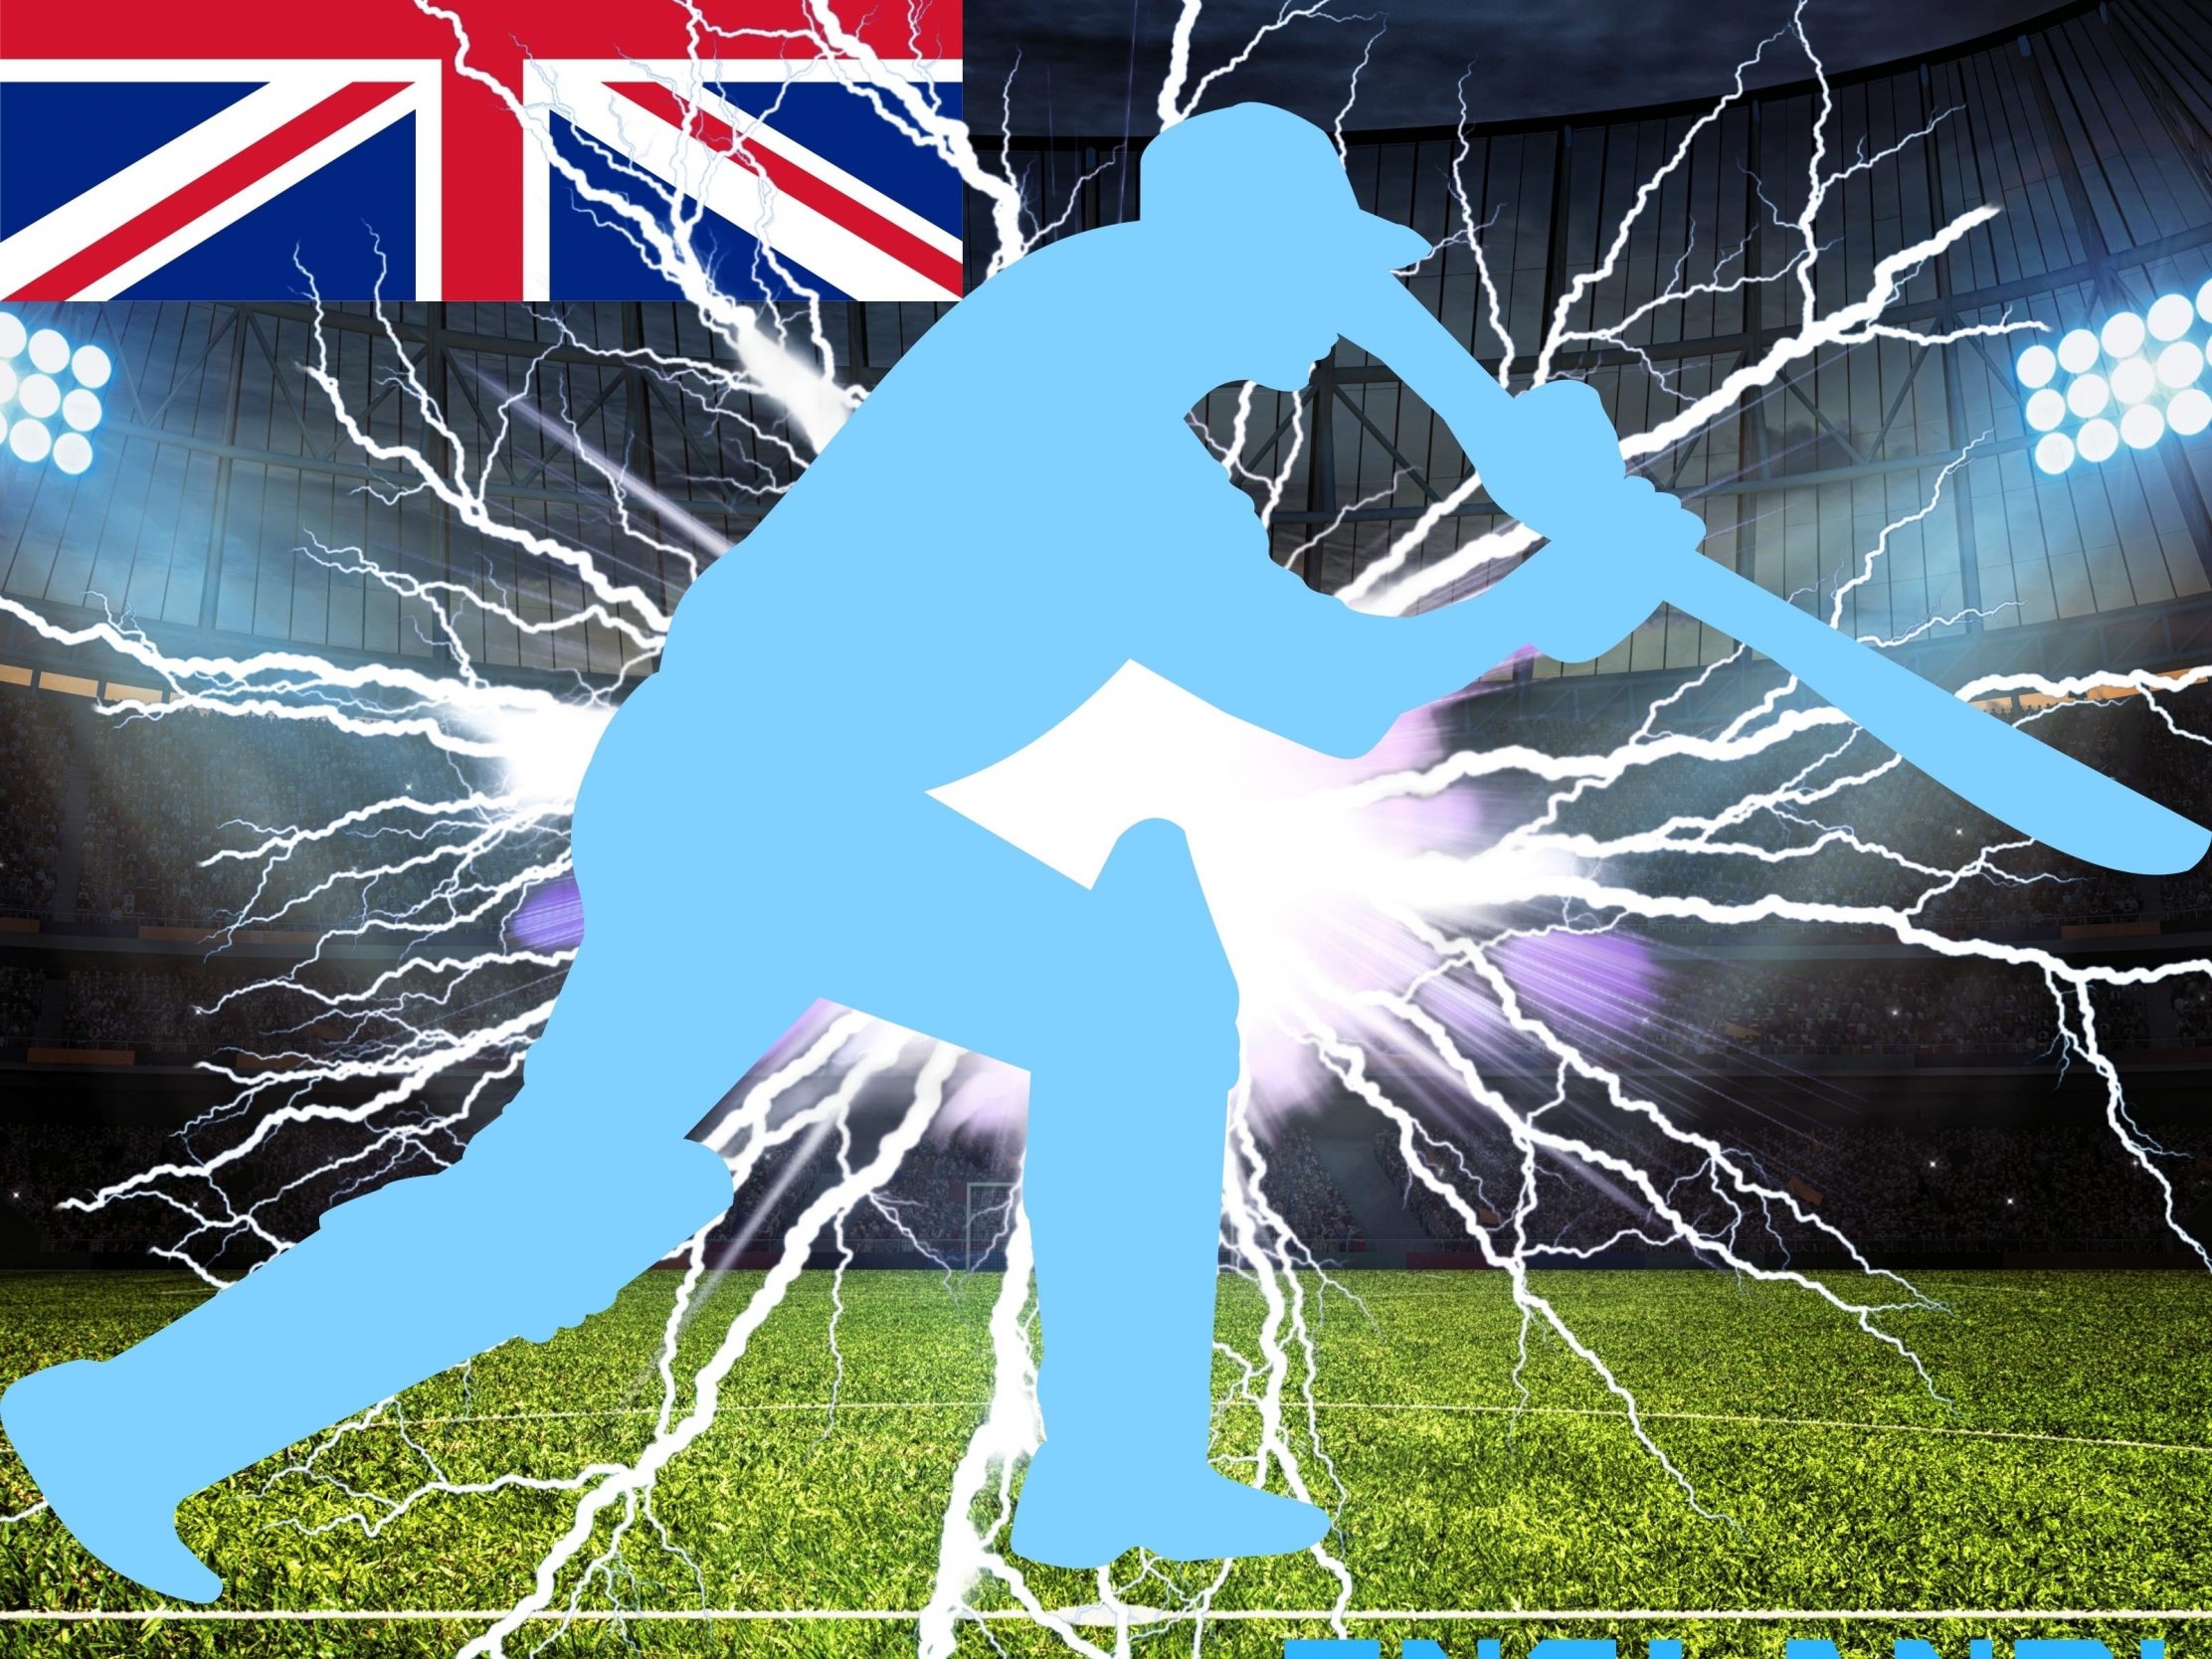 2224x1668 iPad Pro wallpapers England Cricket Stadium iPad Wallpaper 2224x1668 pixels resolution